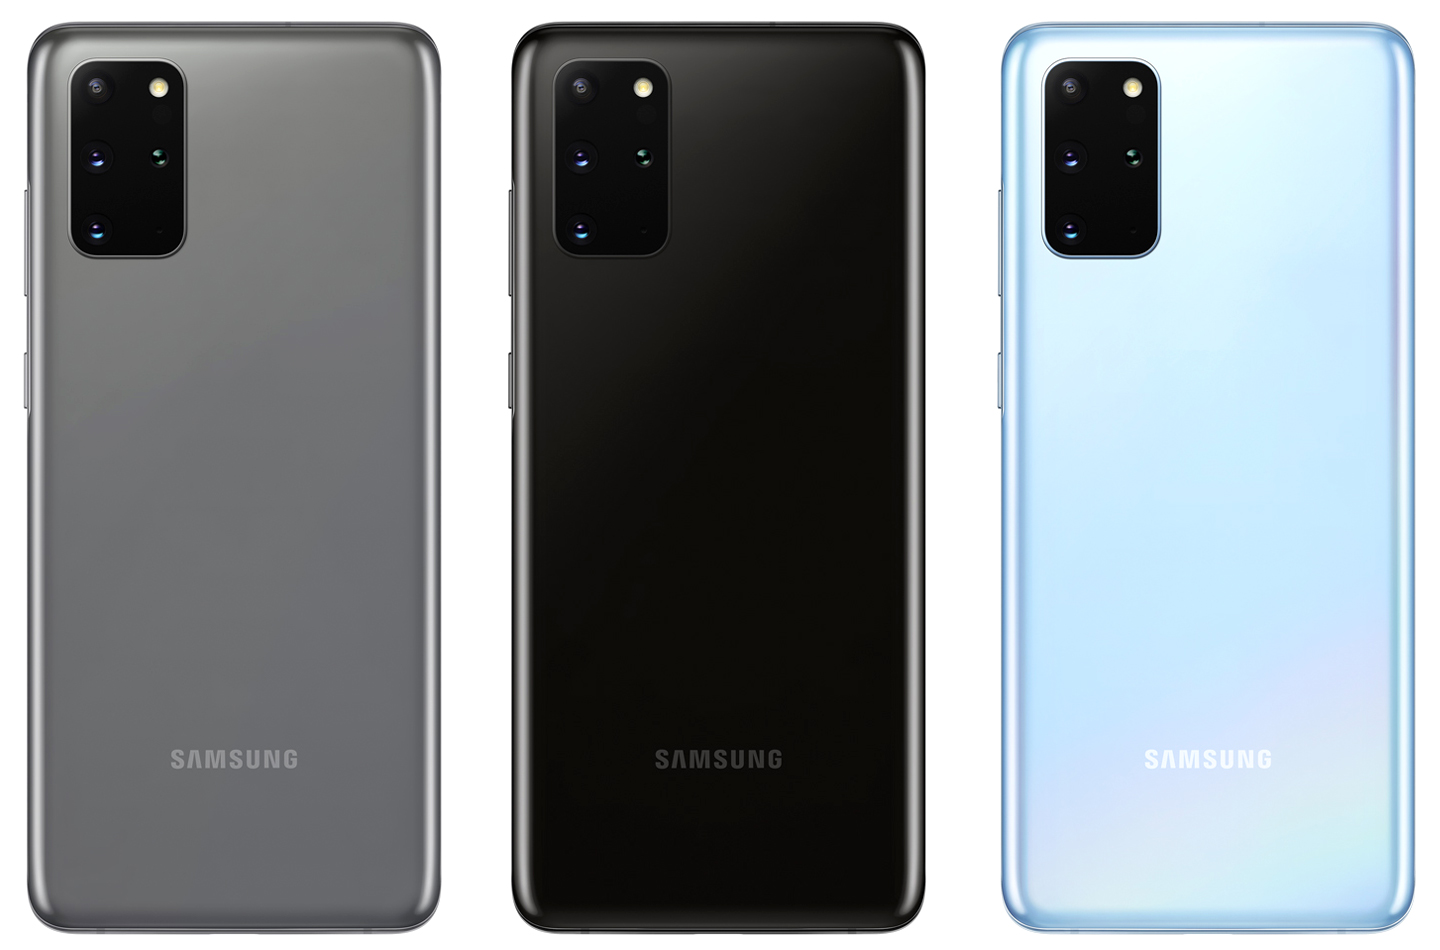 Samsung Galaxy S20 Plus smartphone